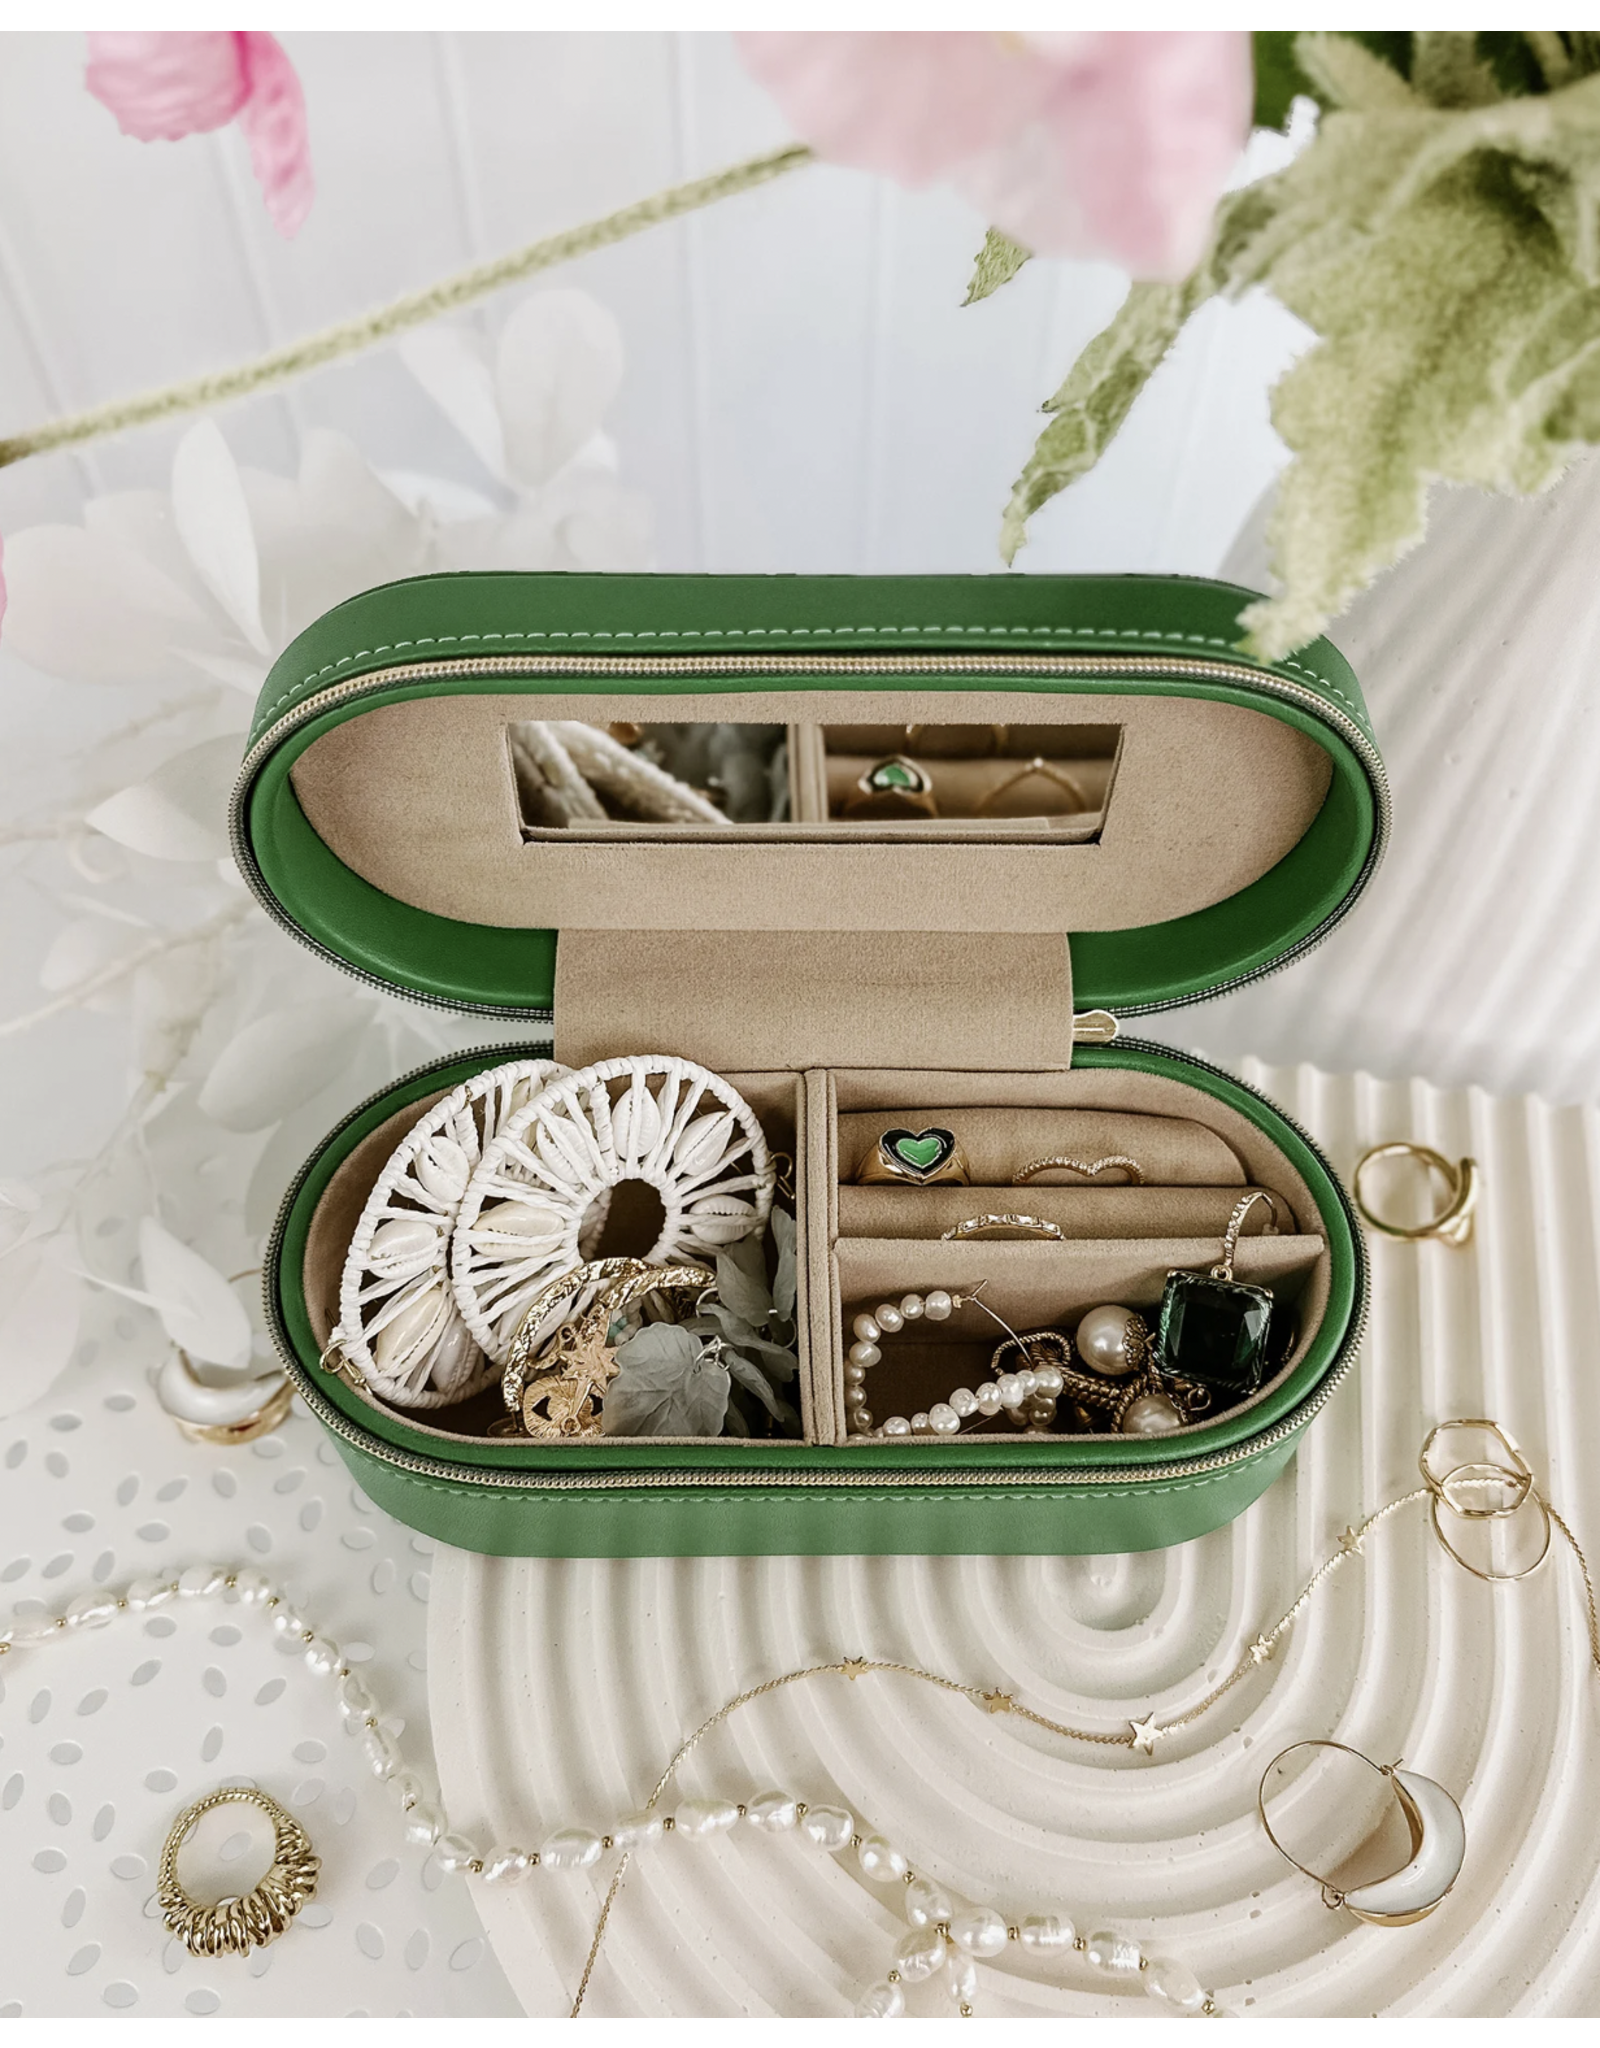 Louenhide Louenhide - Charlee jewelry box (Green)